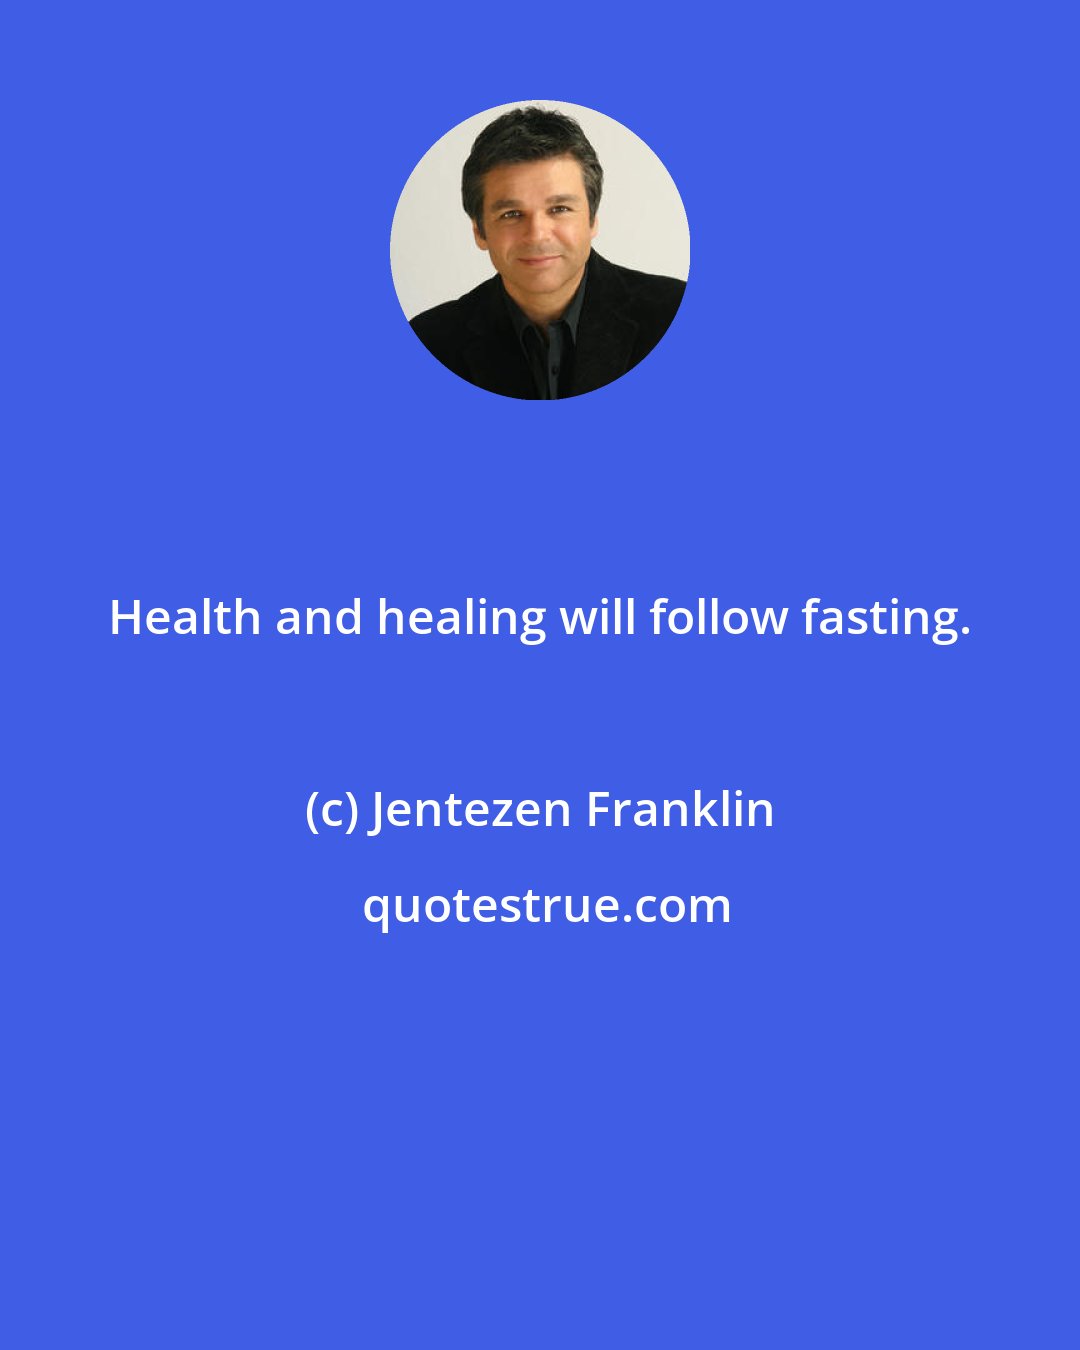 Jentezen Franklin: Health and healing will follow fasting.